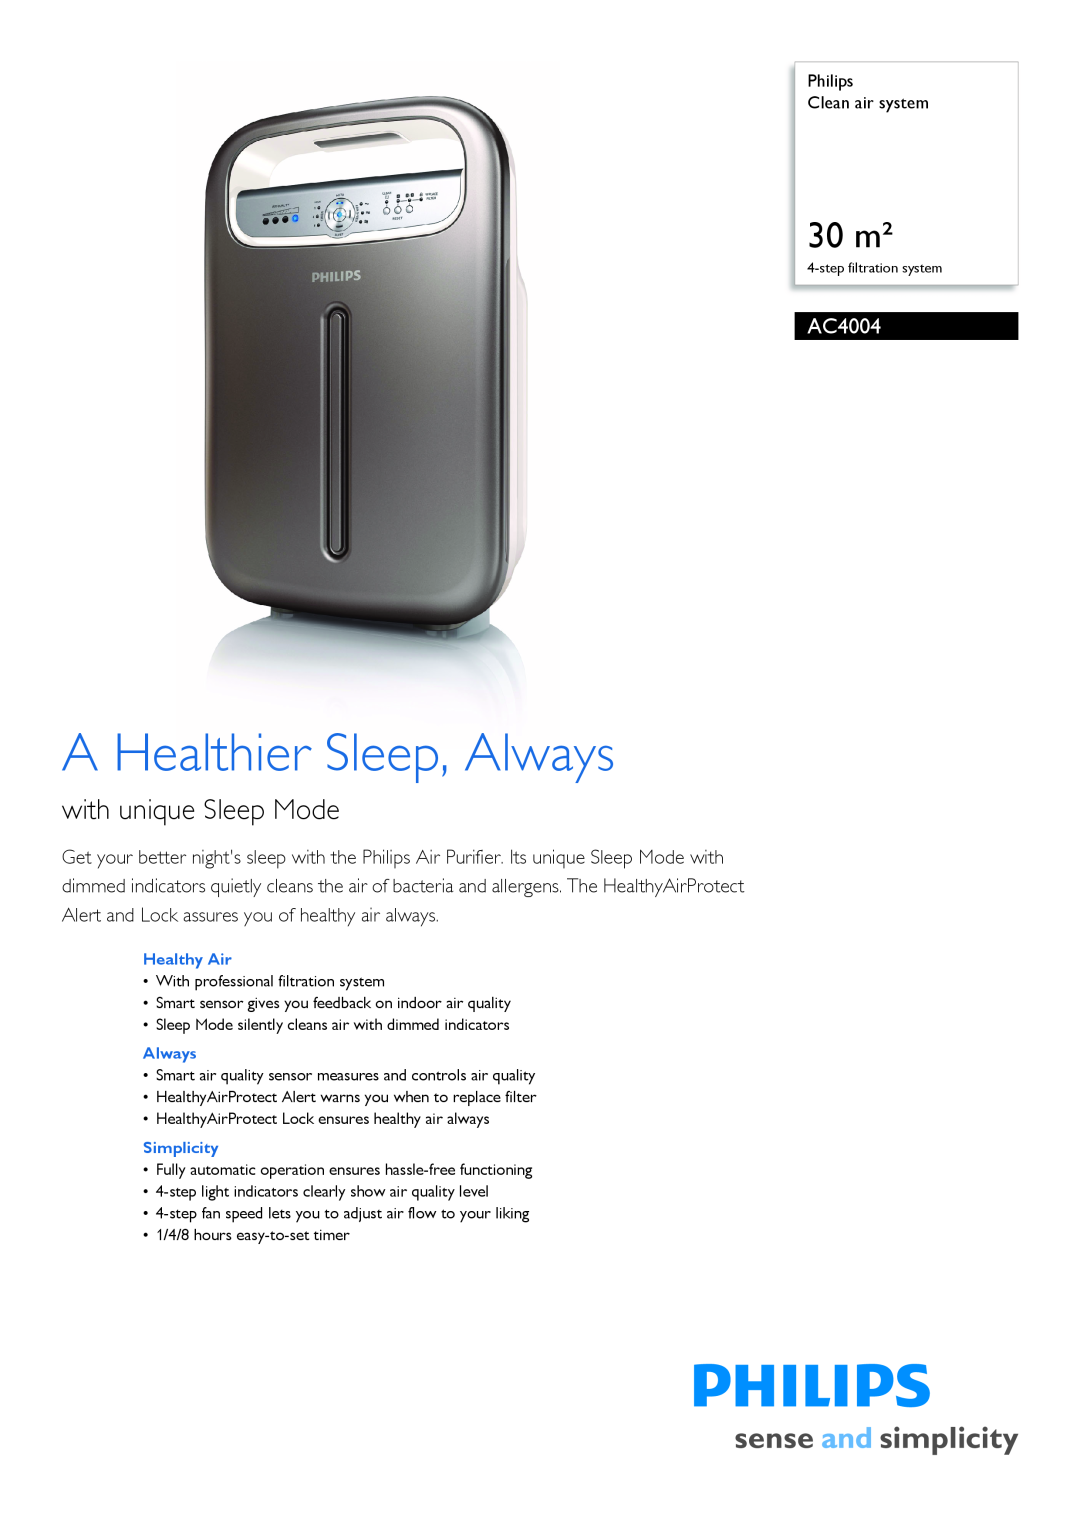 Philips AC4004/00 manual Philips Clean air system, Healthy Air, Simplicity, A Healthier Sleep, Always, 30 m² 